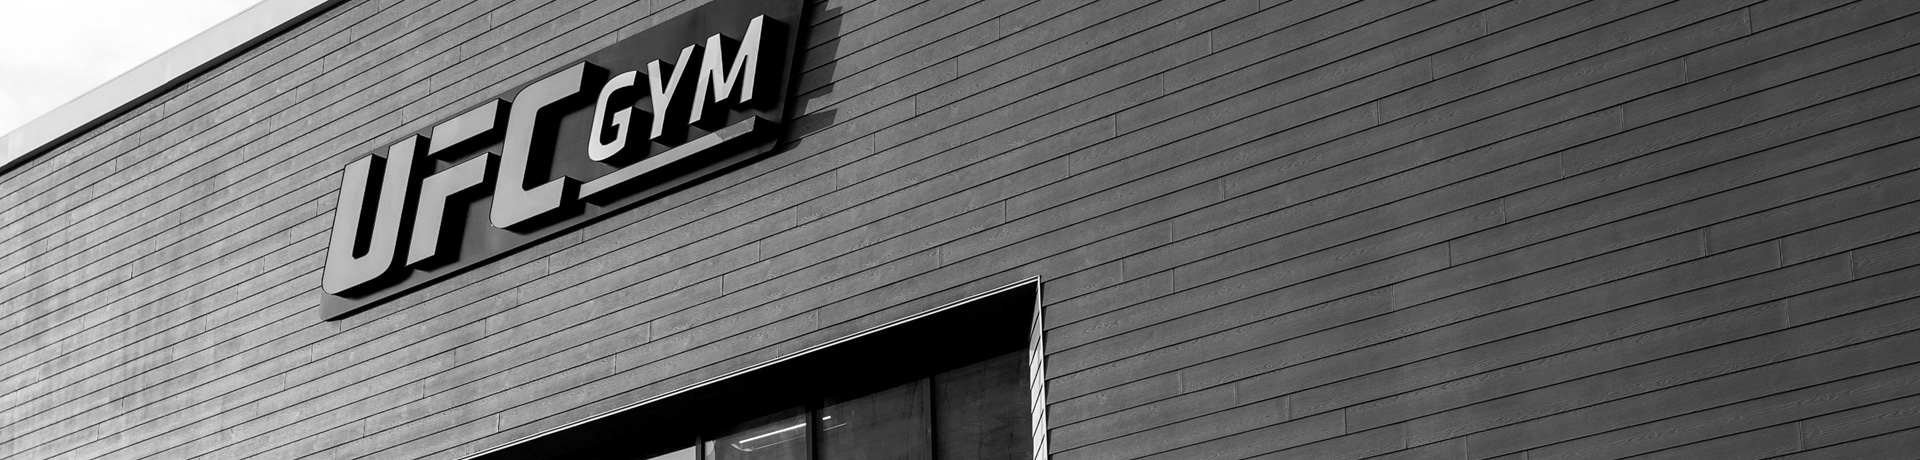 black and white photo of UFC Gym building exterior